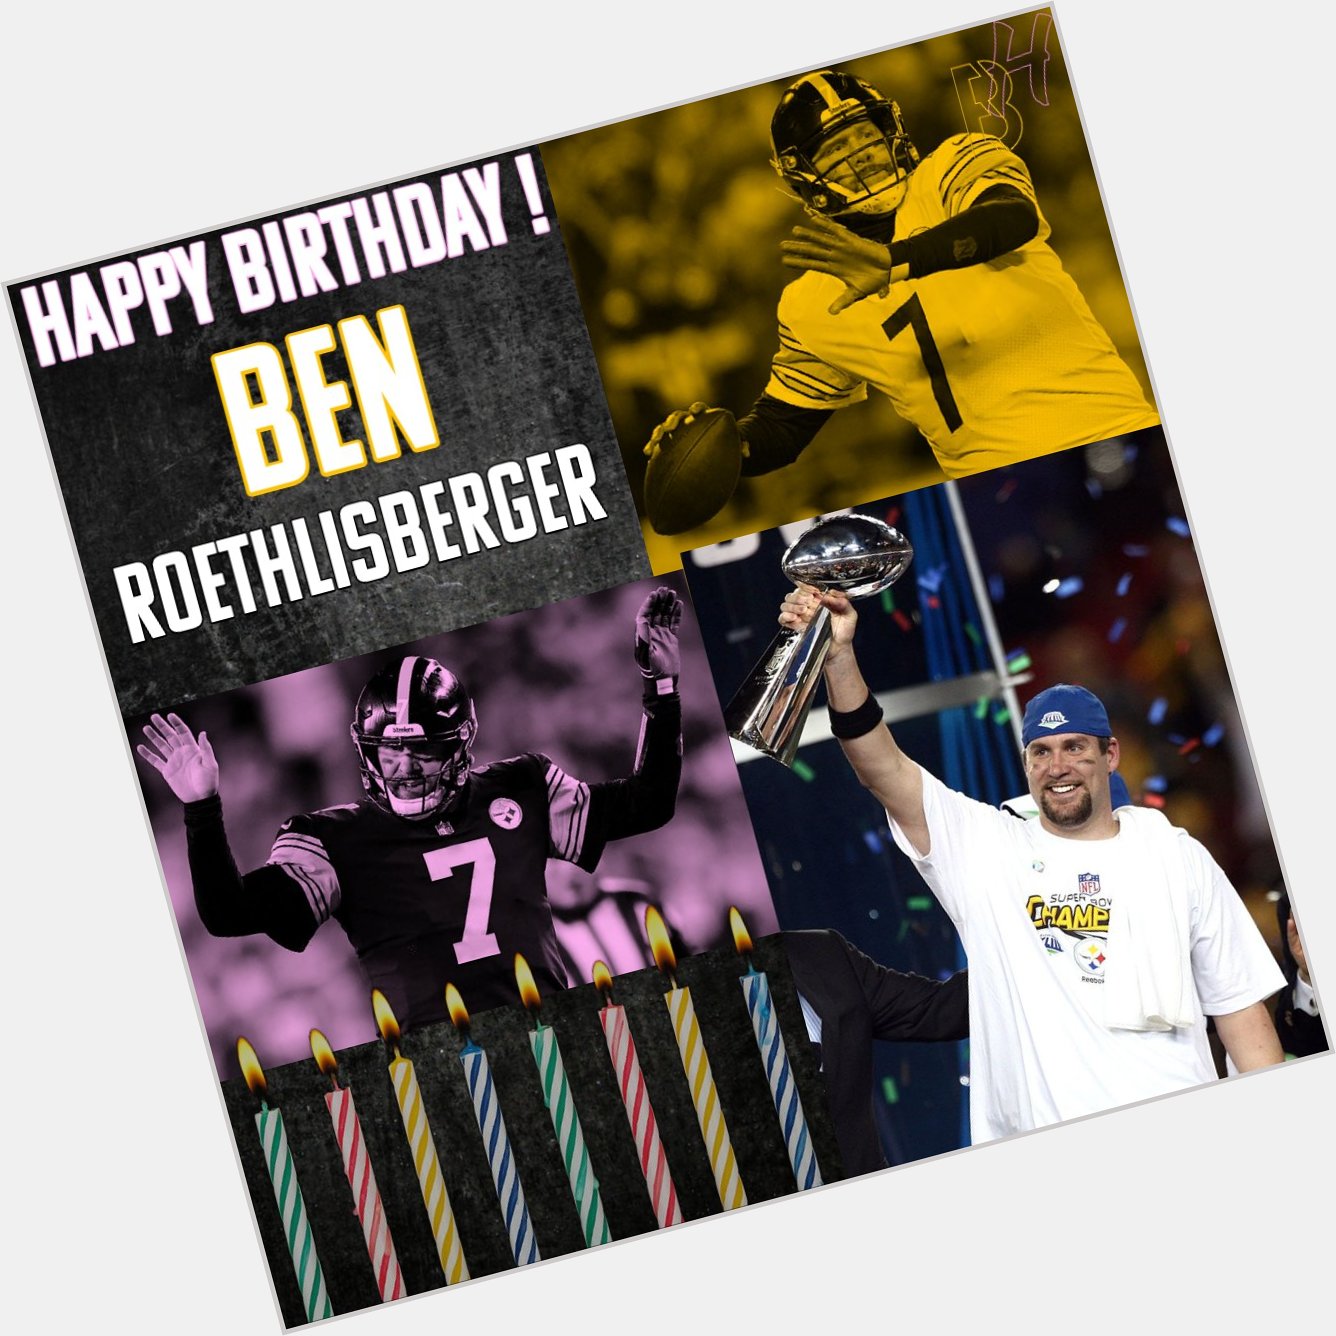 Happy belated Birthday to former Pittsburgh Steelers quarterback Ben Roethlisberger ( 